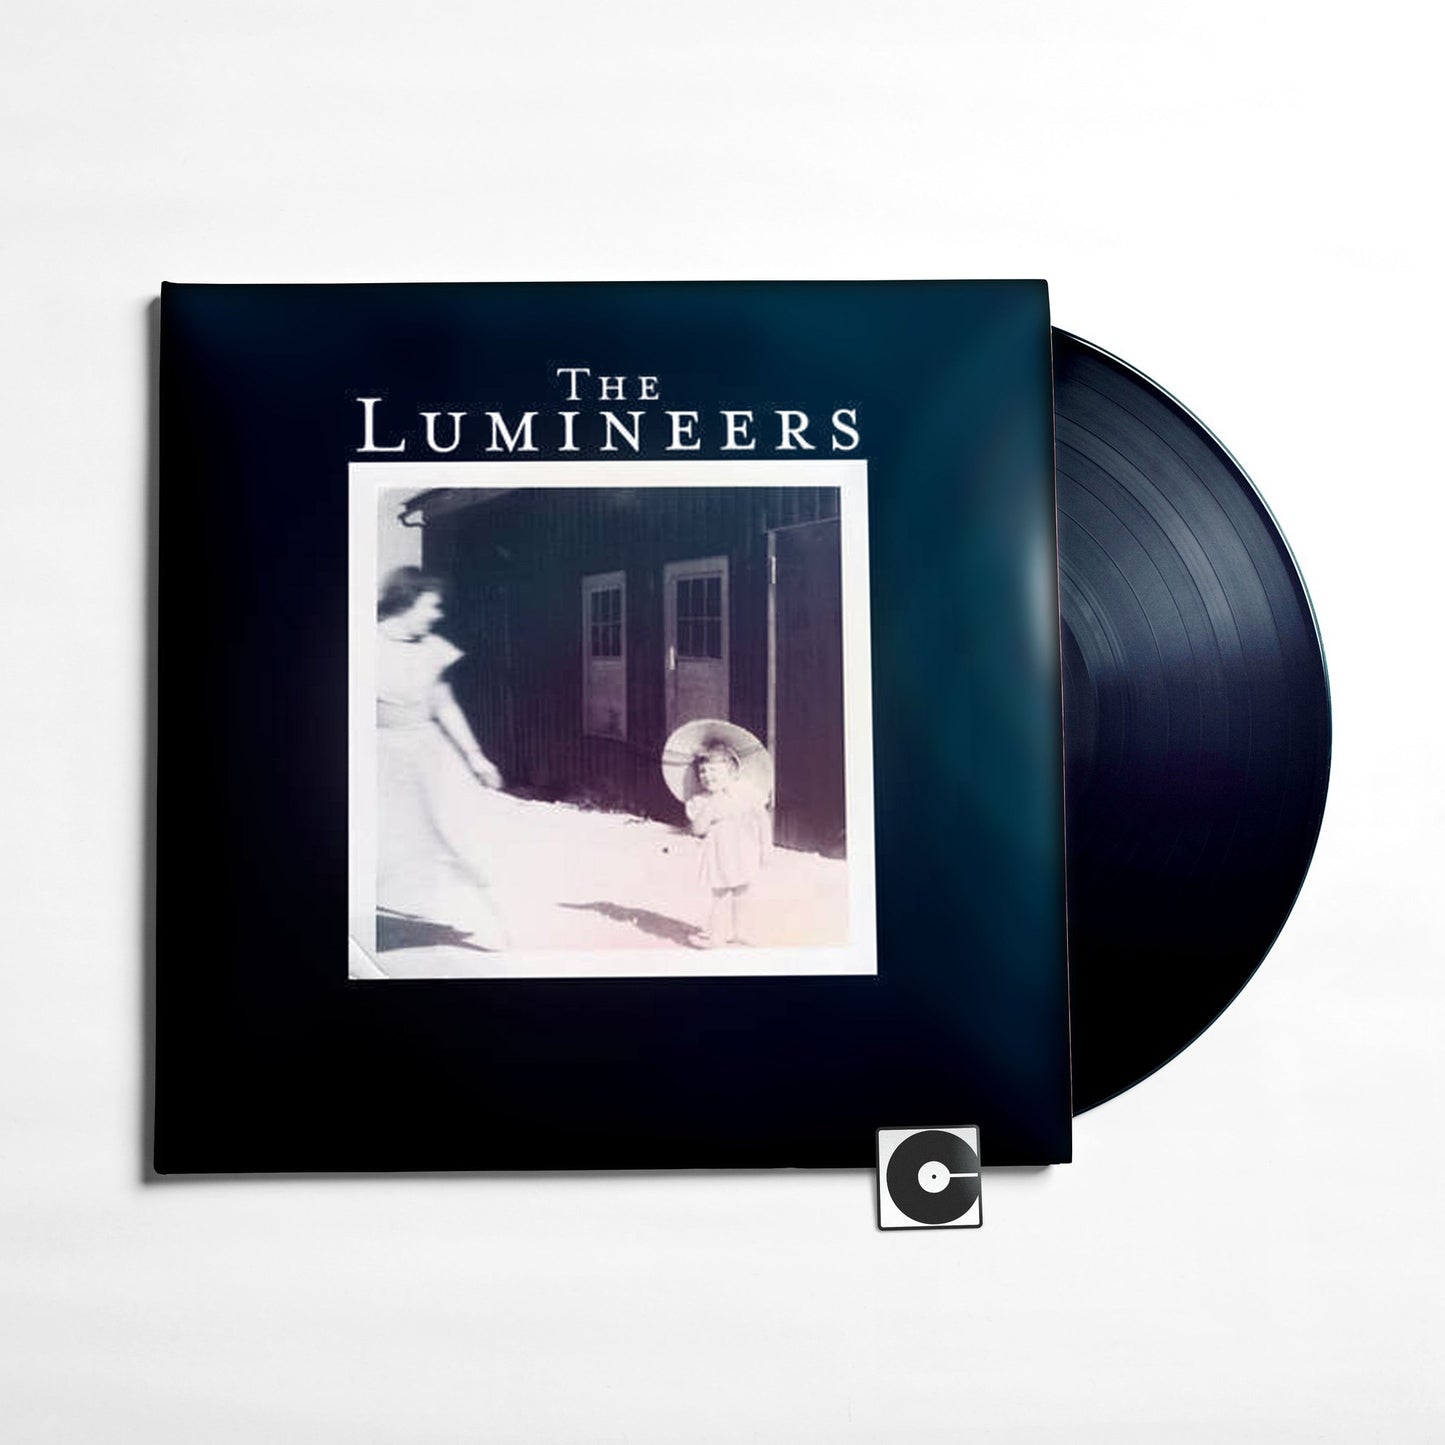 The Lumineers - "The Lumineers"